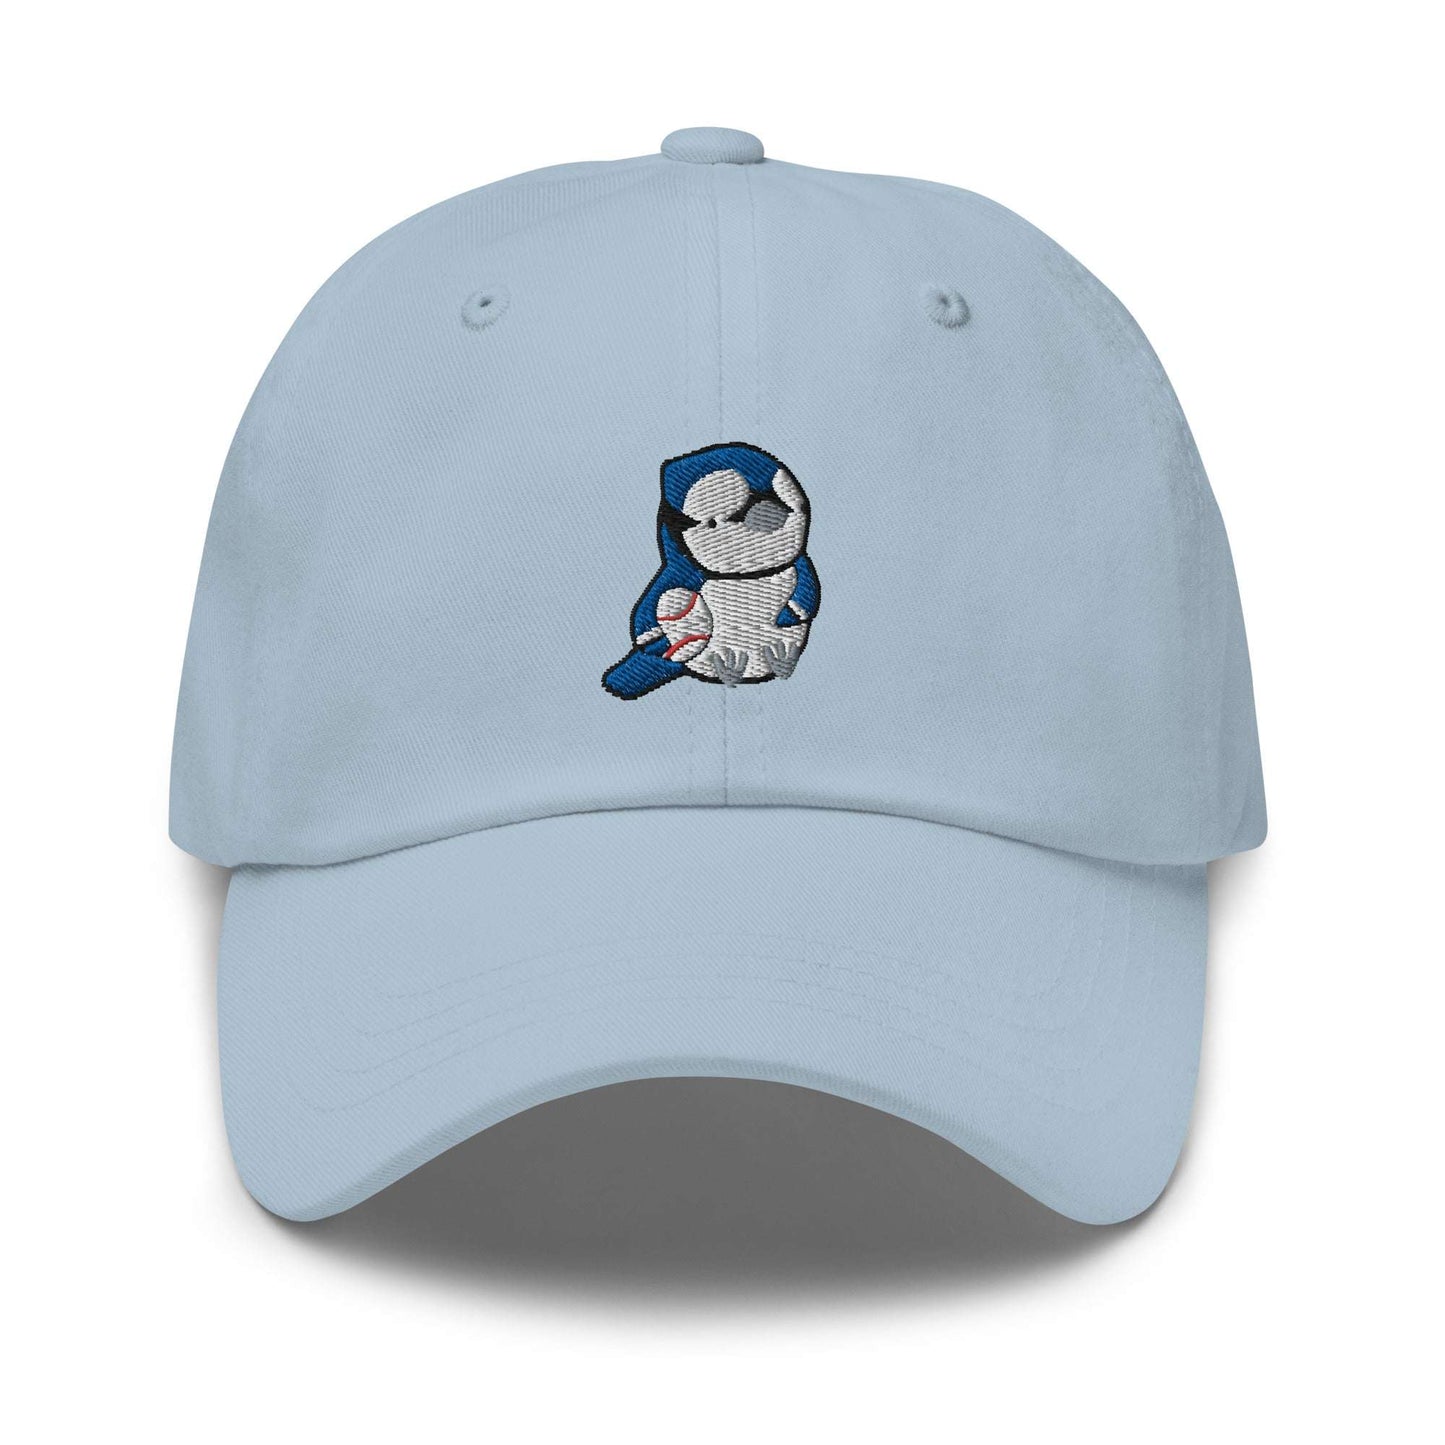 Embroidered Blue Jay Baseball Cap: Light Blue